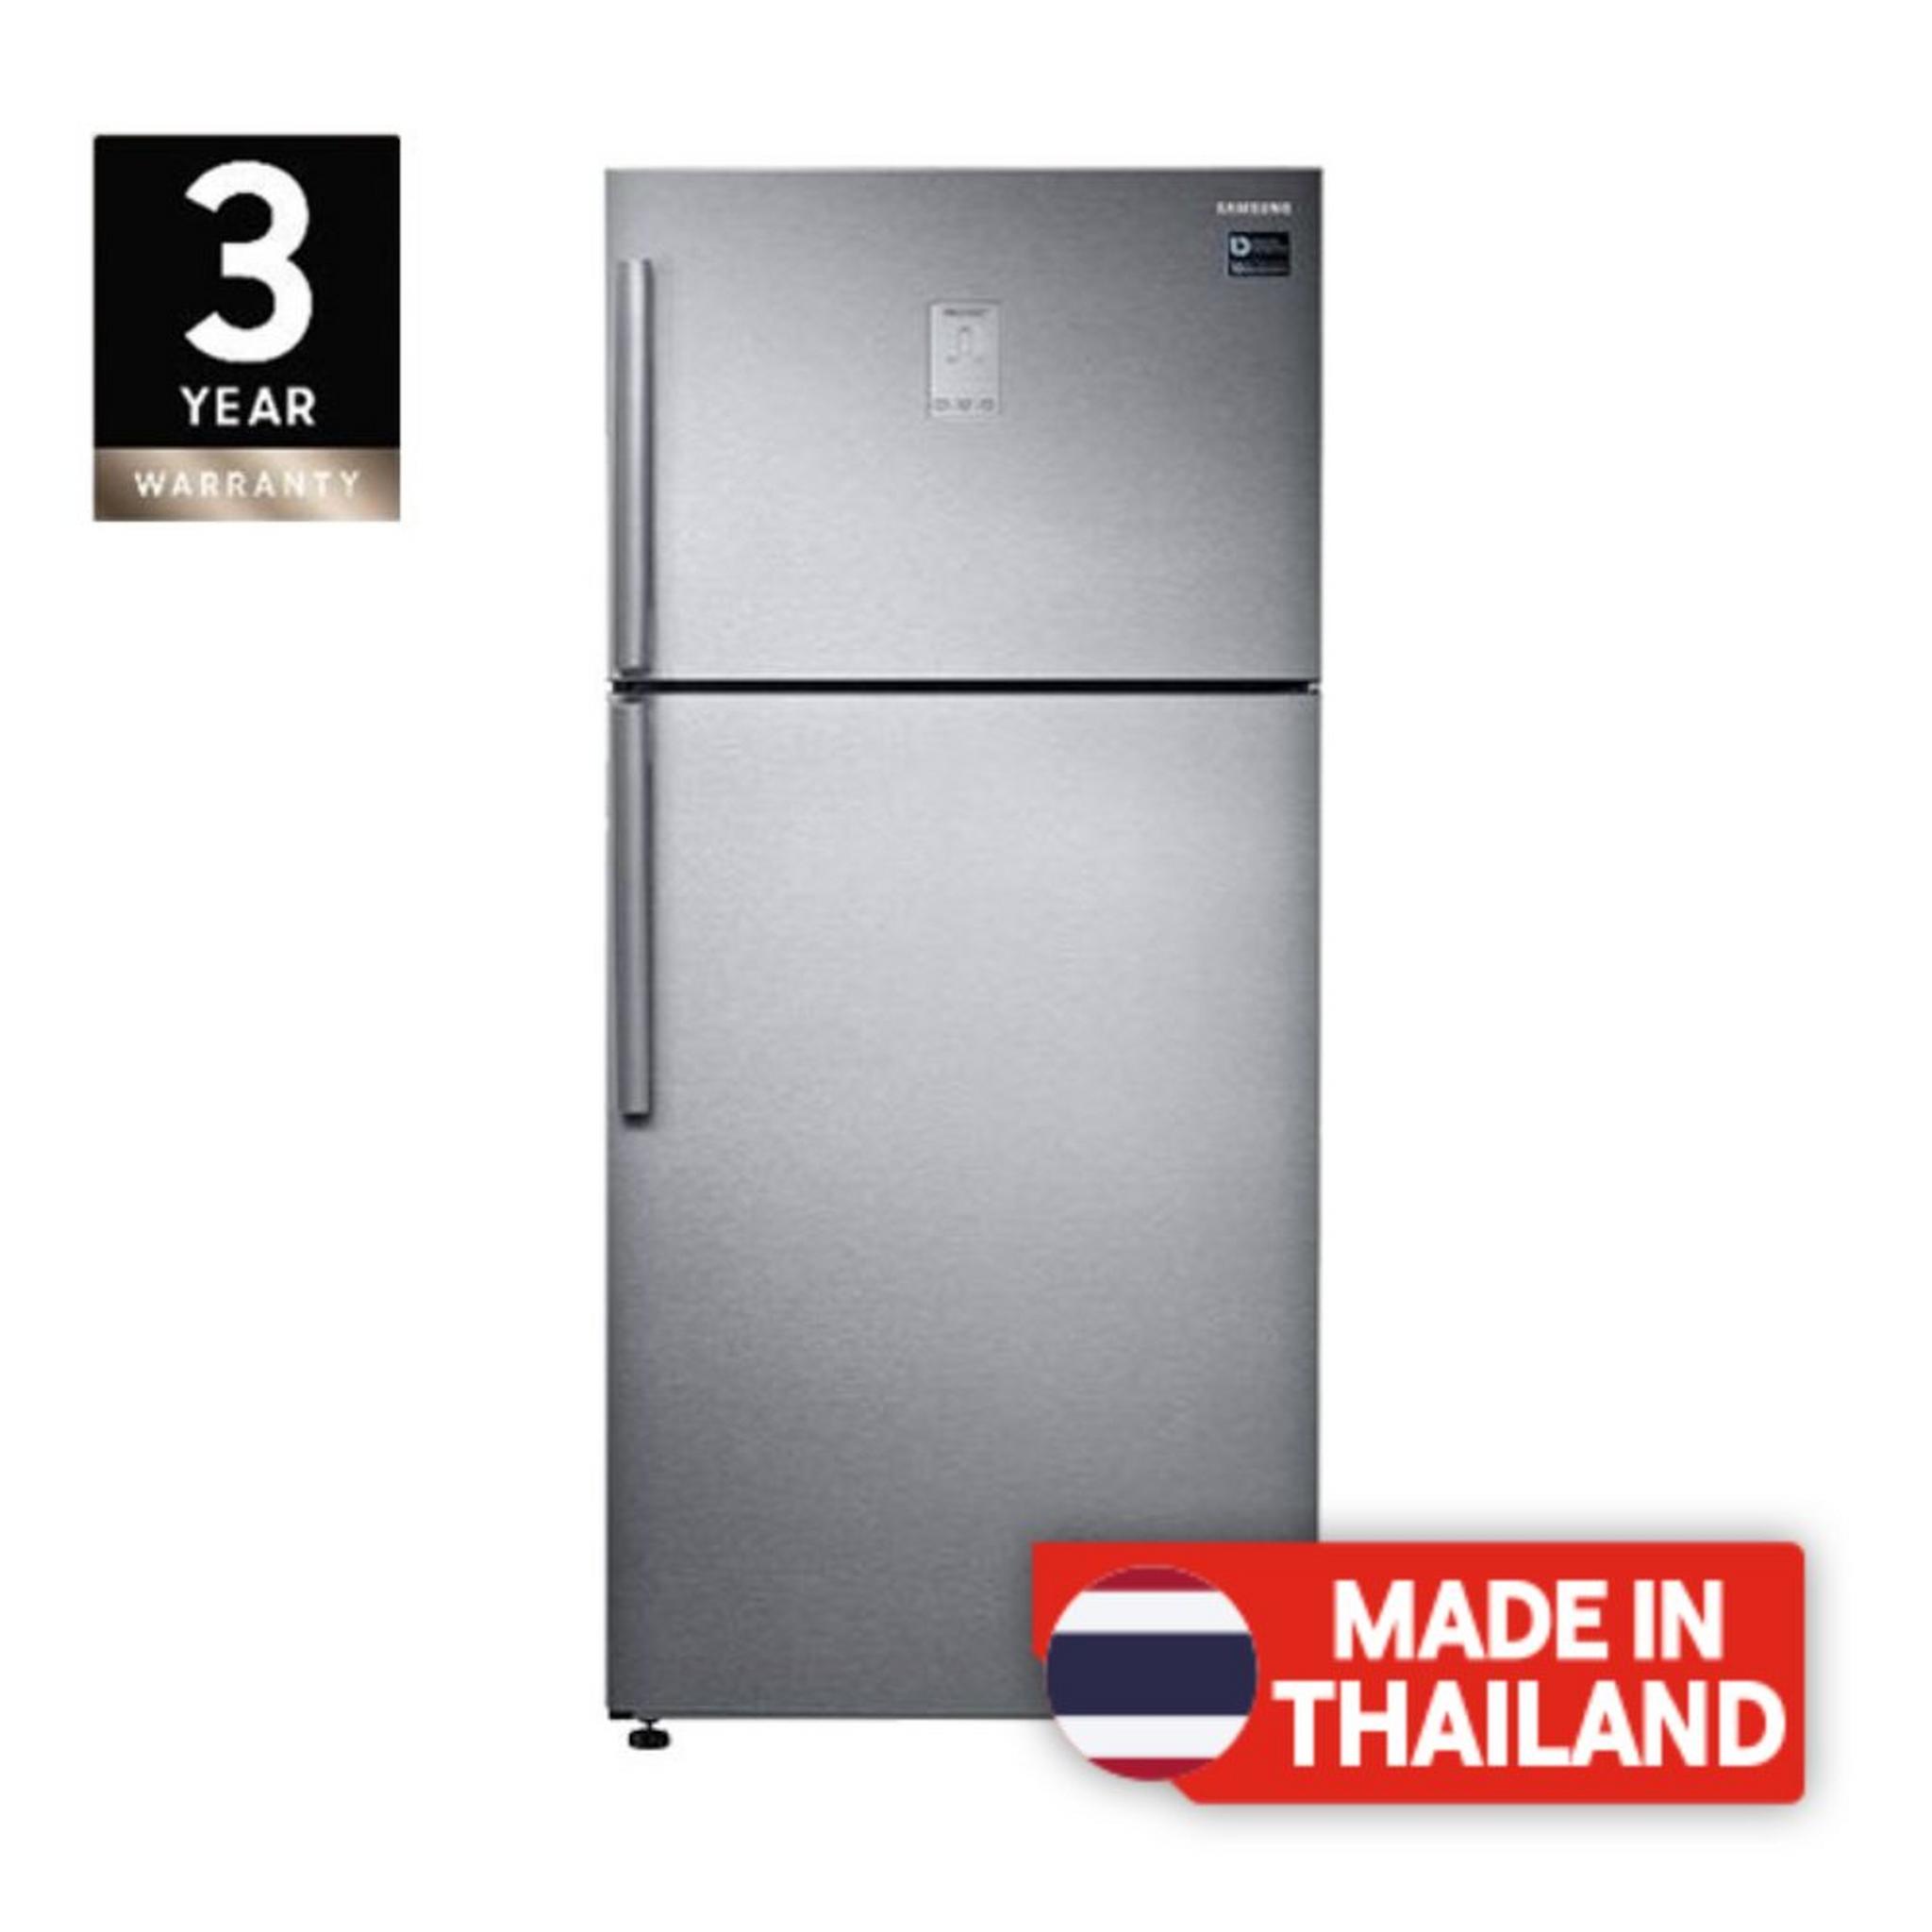 Samsung Top Mount Refrigerator, 25CFT, 720-Liters, RT72K6350 - Silver